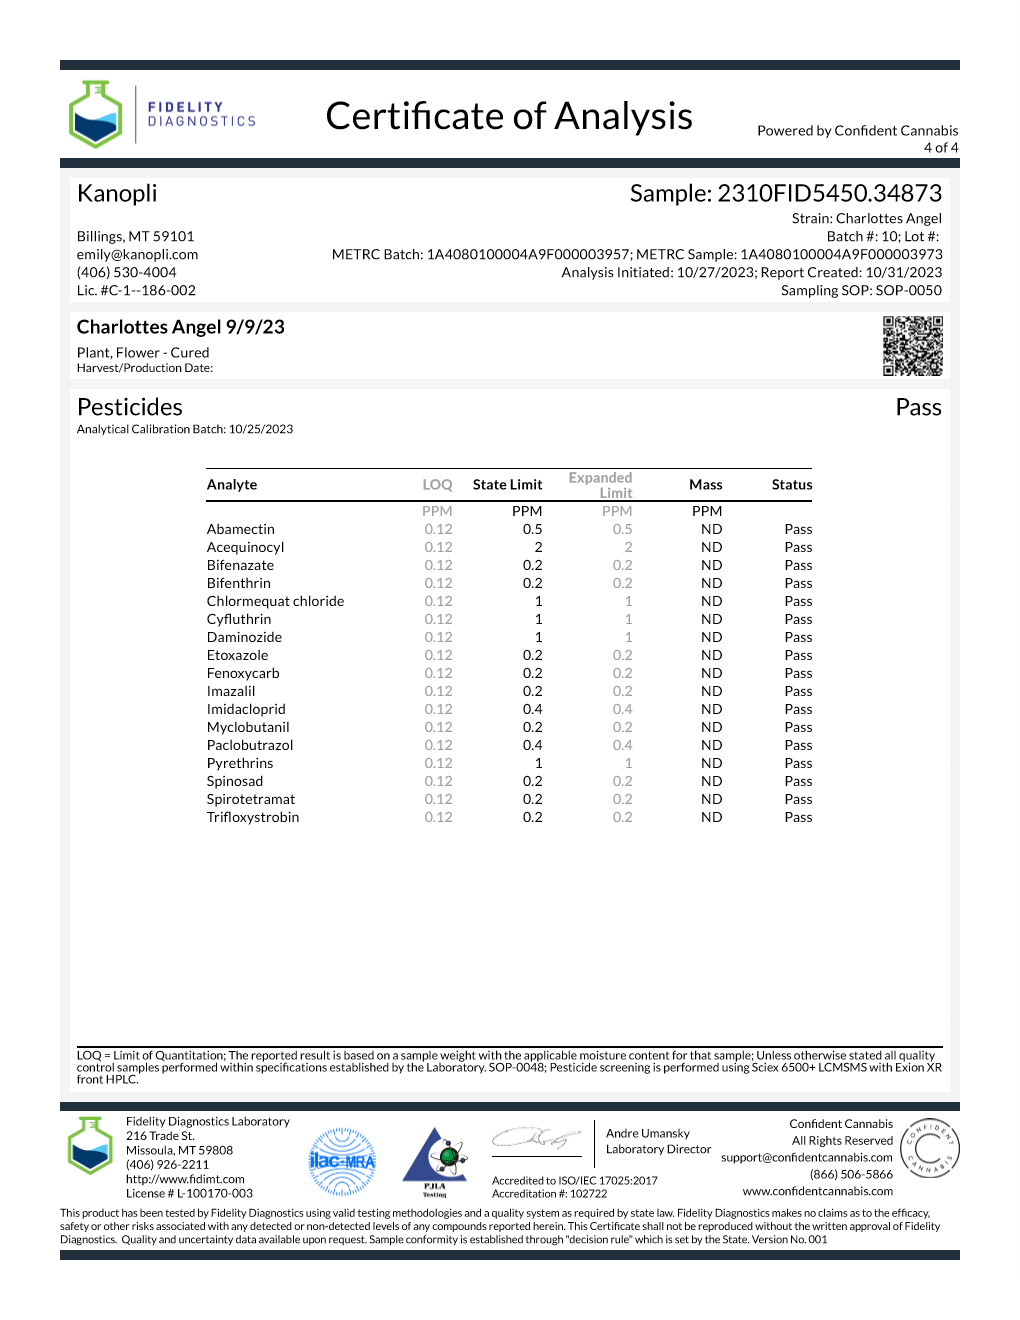 Charlotte's Angel - CBD Dominant 15% CBDa (Sept. 2023) MEDICAL